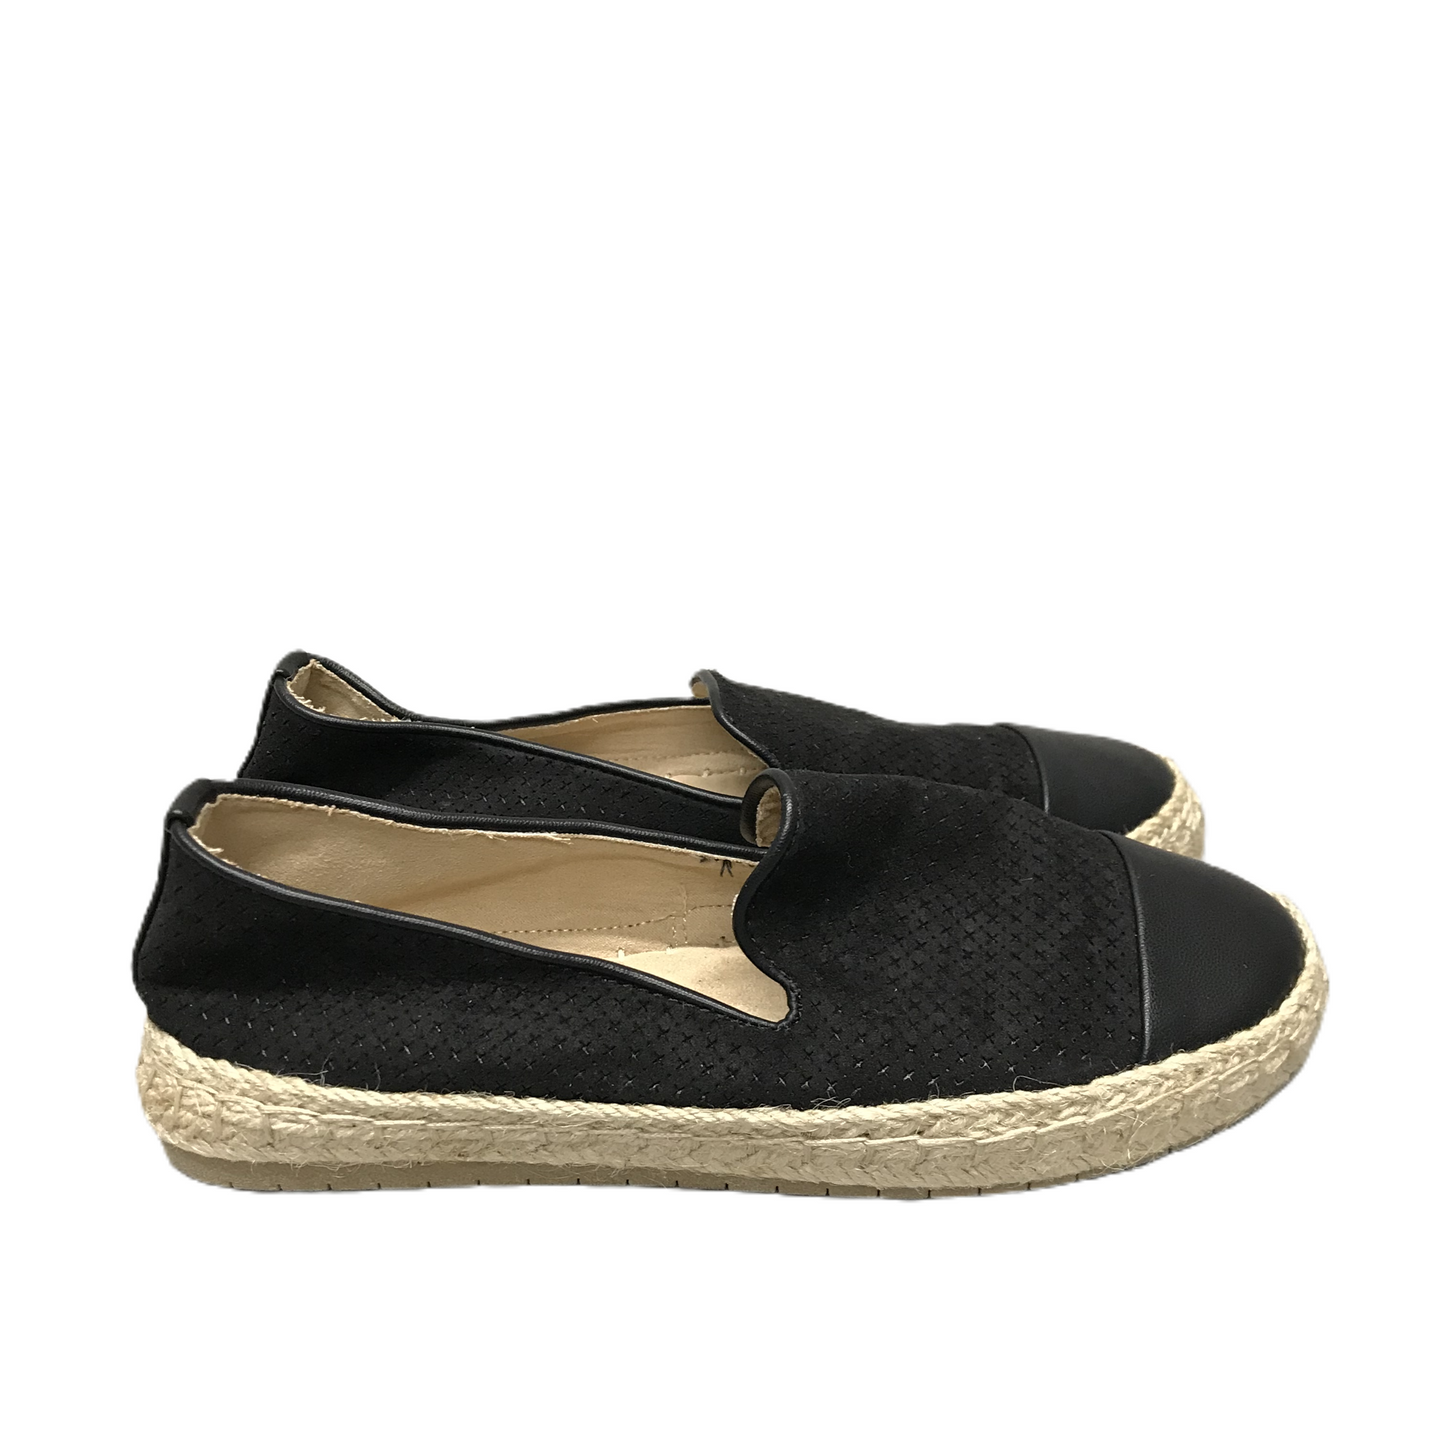 Black & Tan Shoes Flats By Charter Club, Size: 7